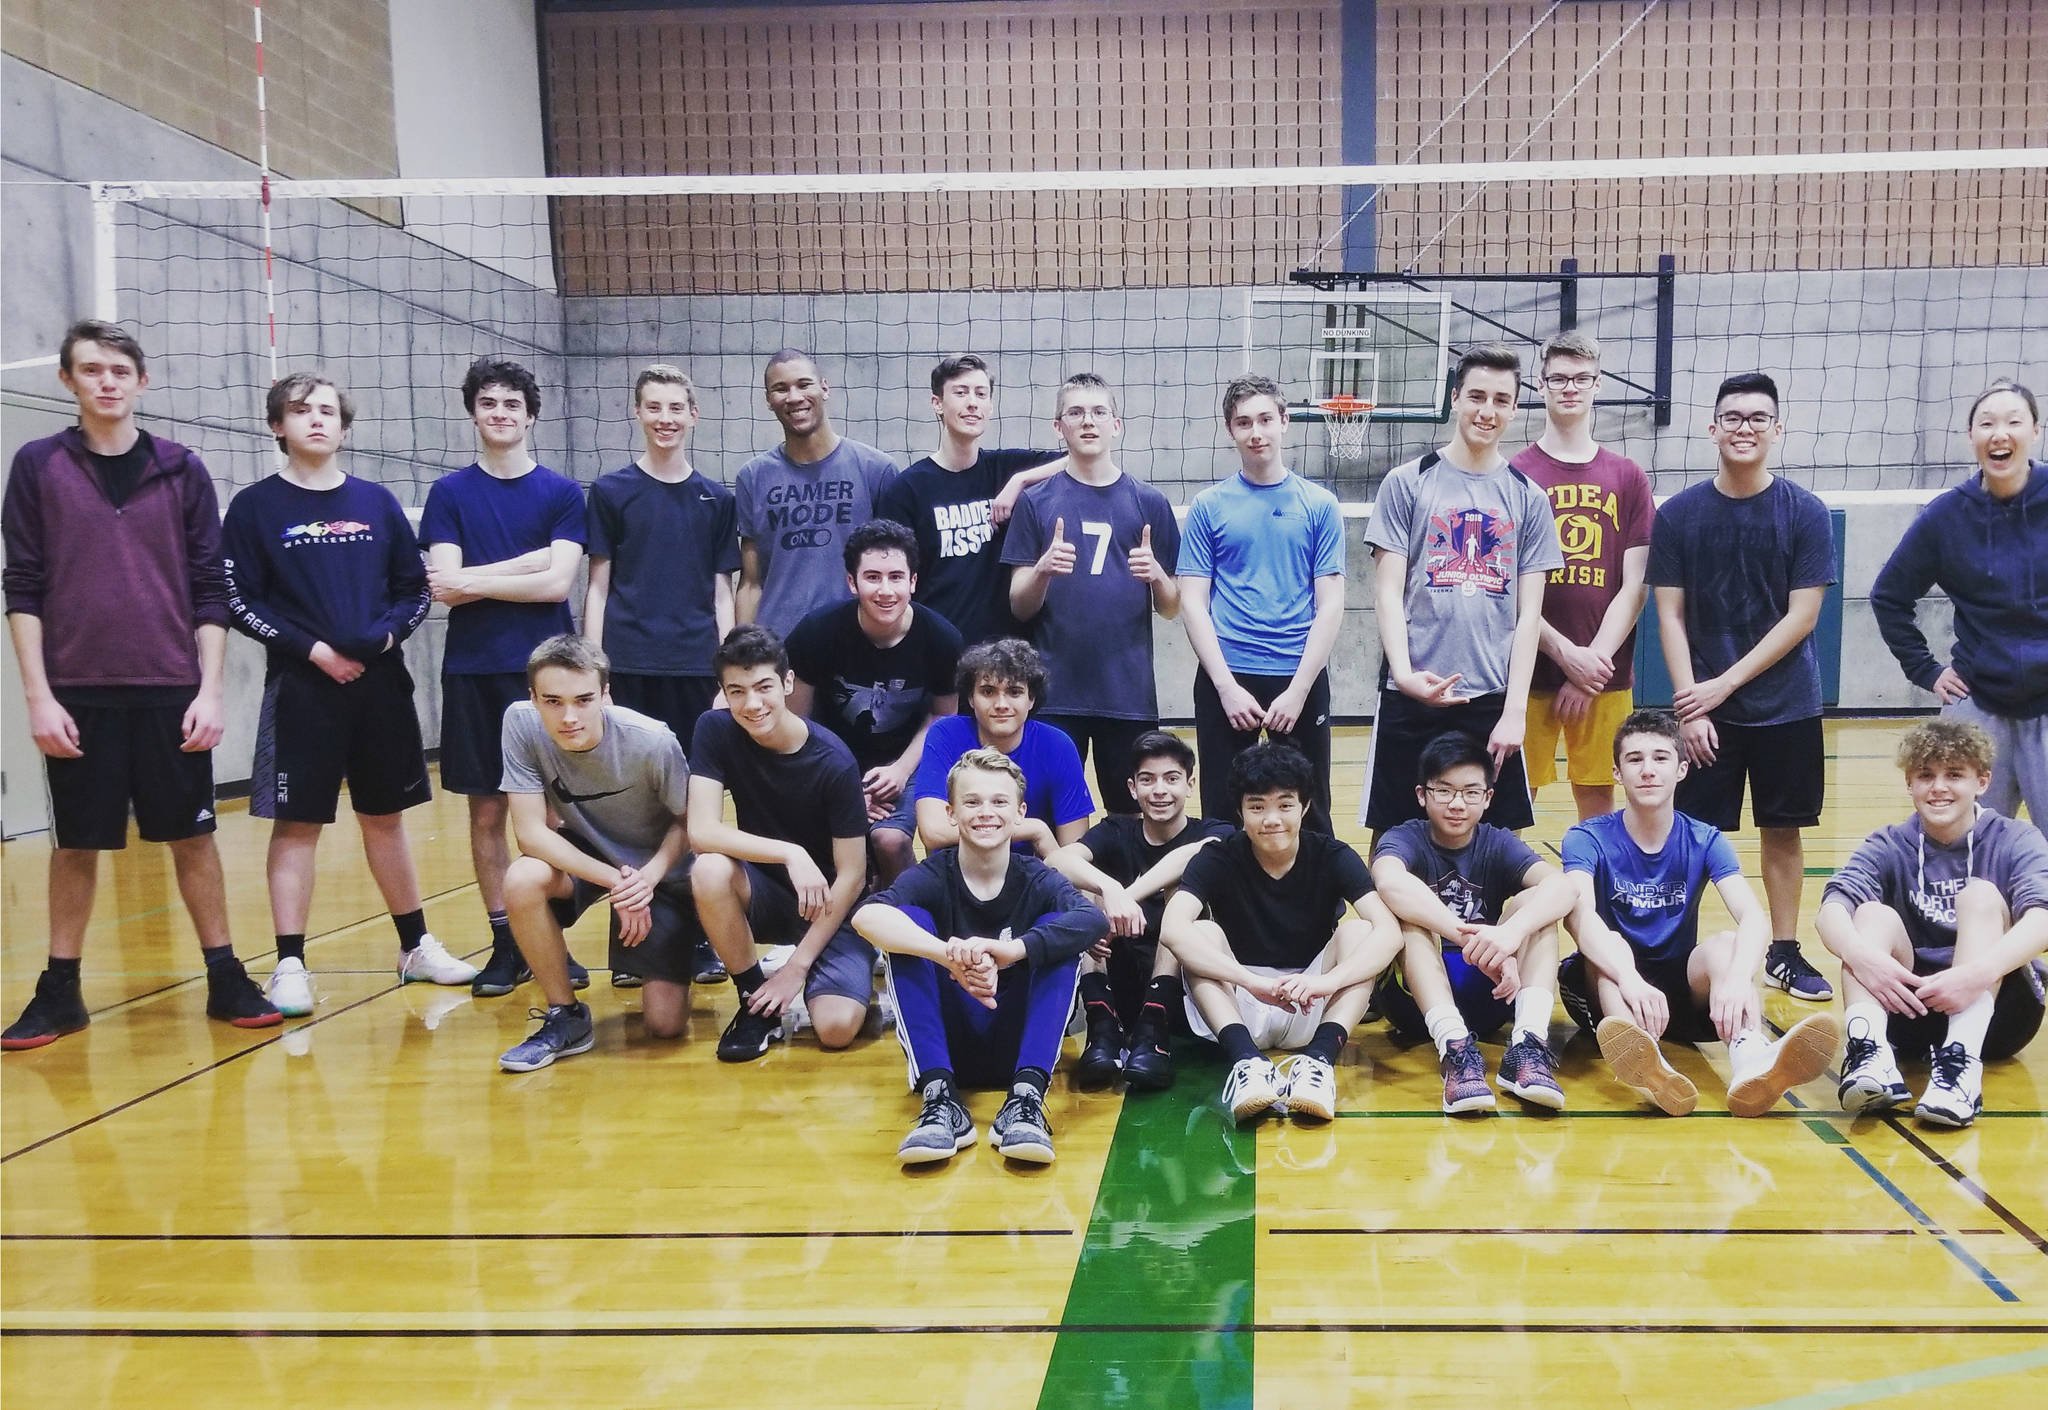 Club V Boys Volleyball — Club V Sports